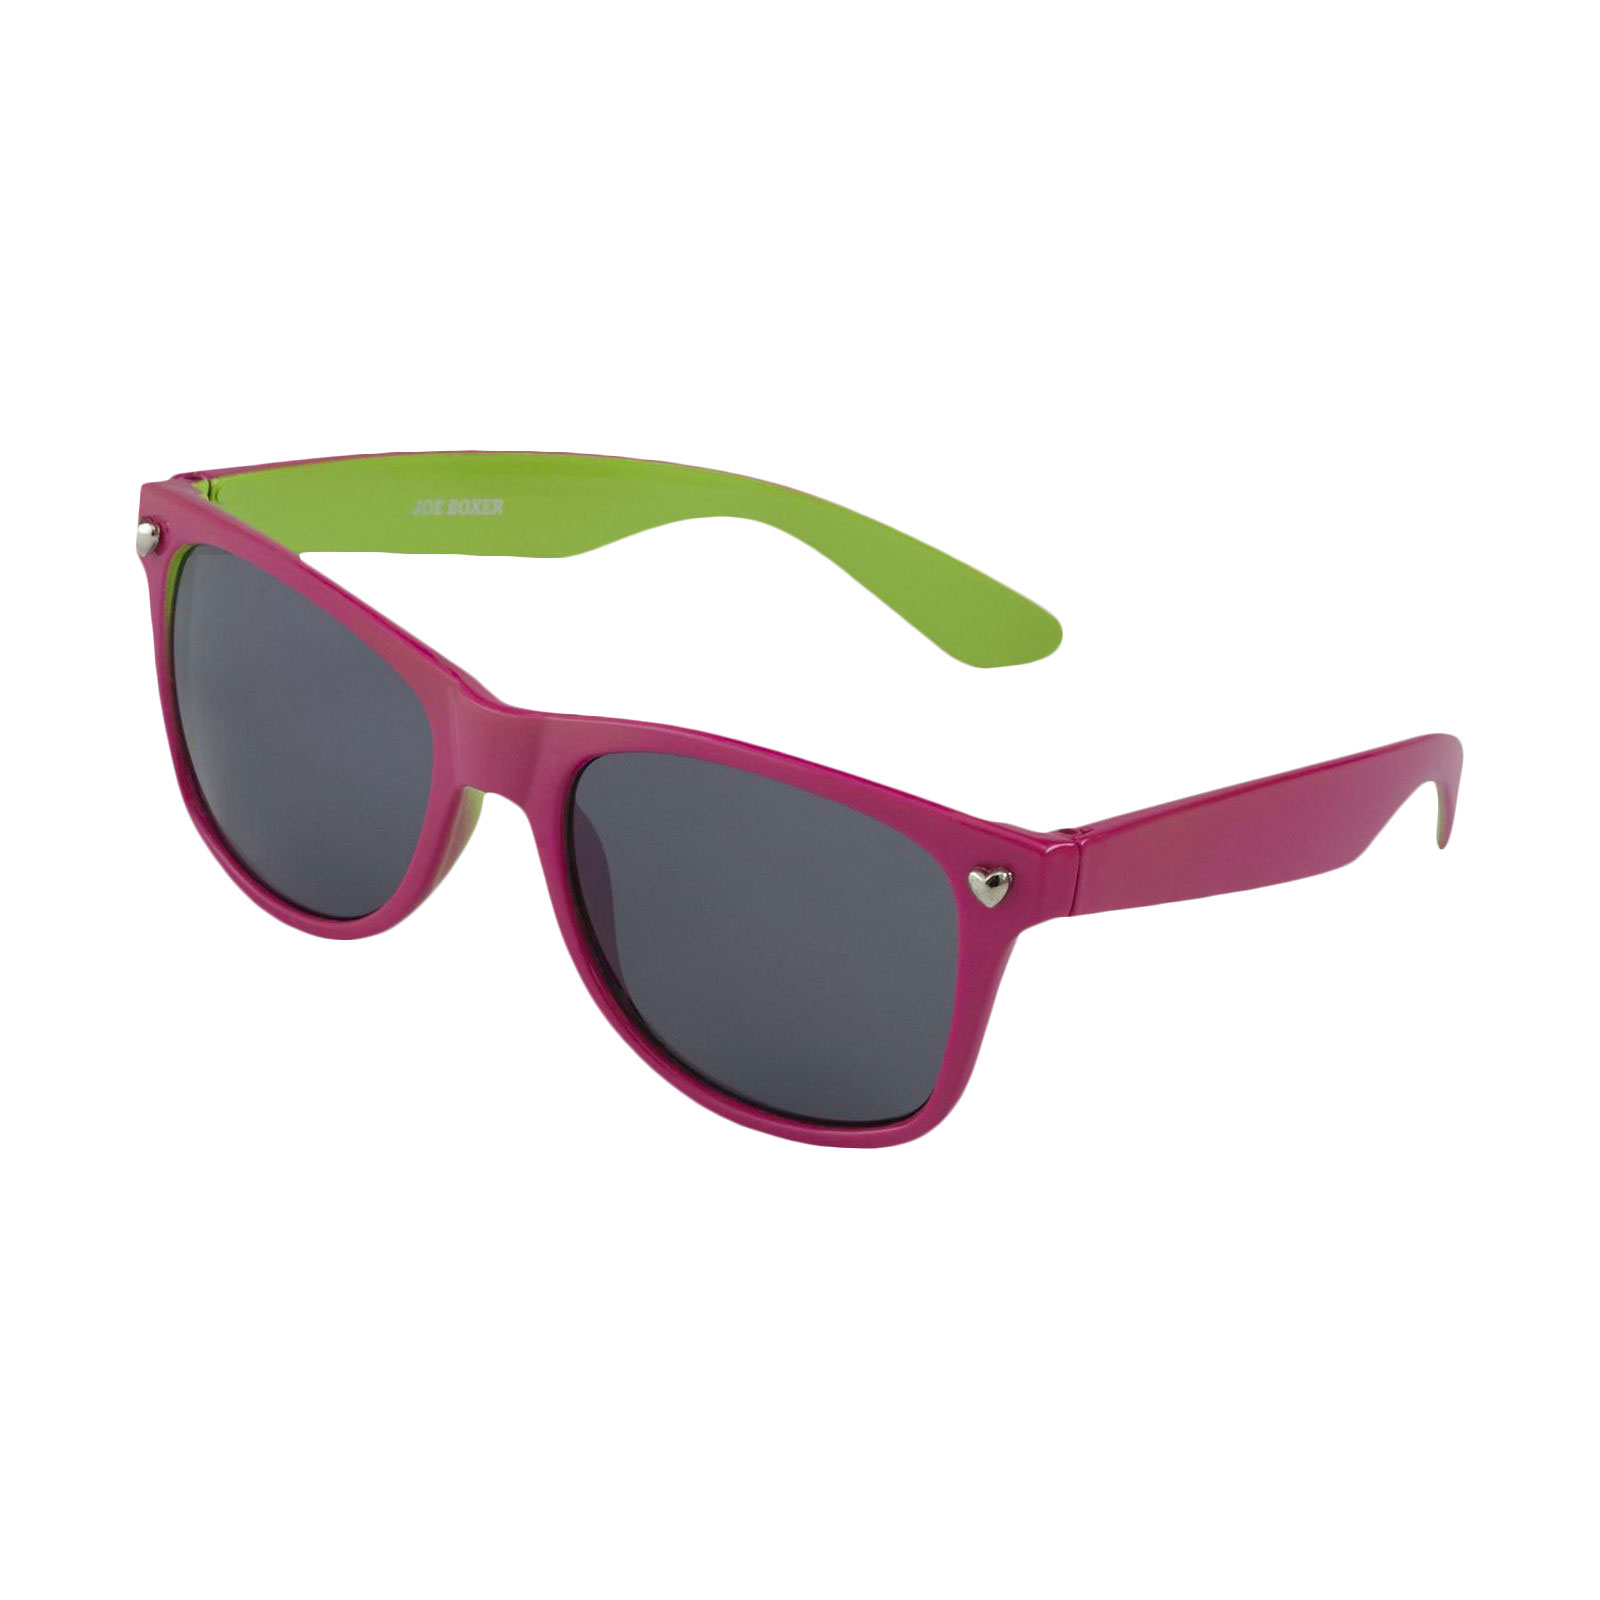 Joe Boxer Women's Neon Green and Pink Retro Sunglasses